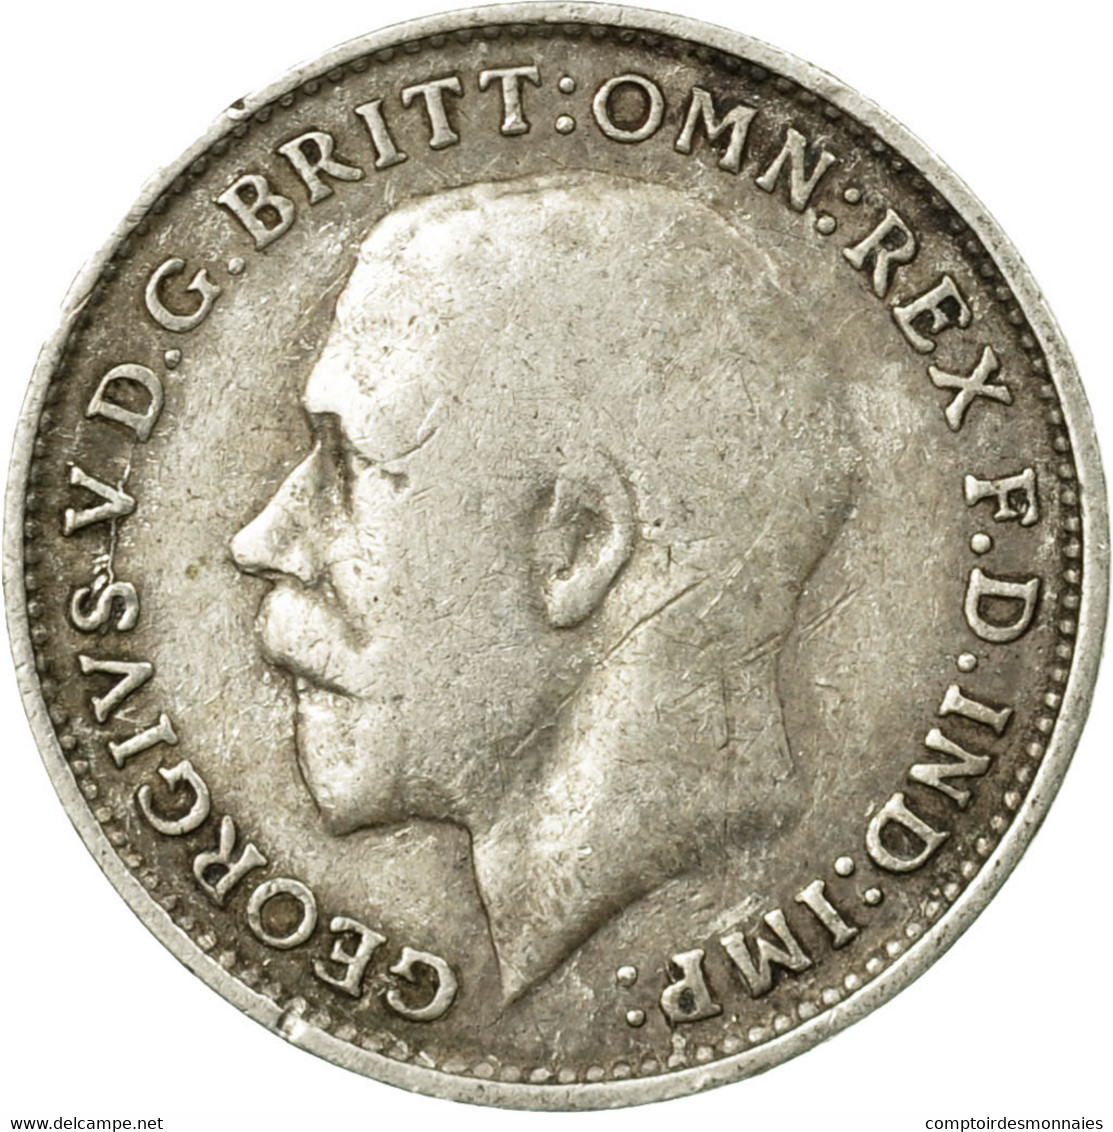 Monnaie, Grande-Bretagne, George V, 3 Pence, 1919, TB+, Argent, KM:813 - F. 3 Pence